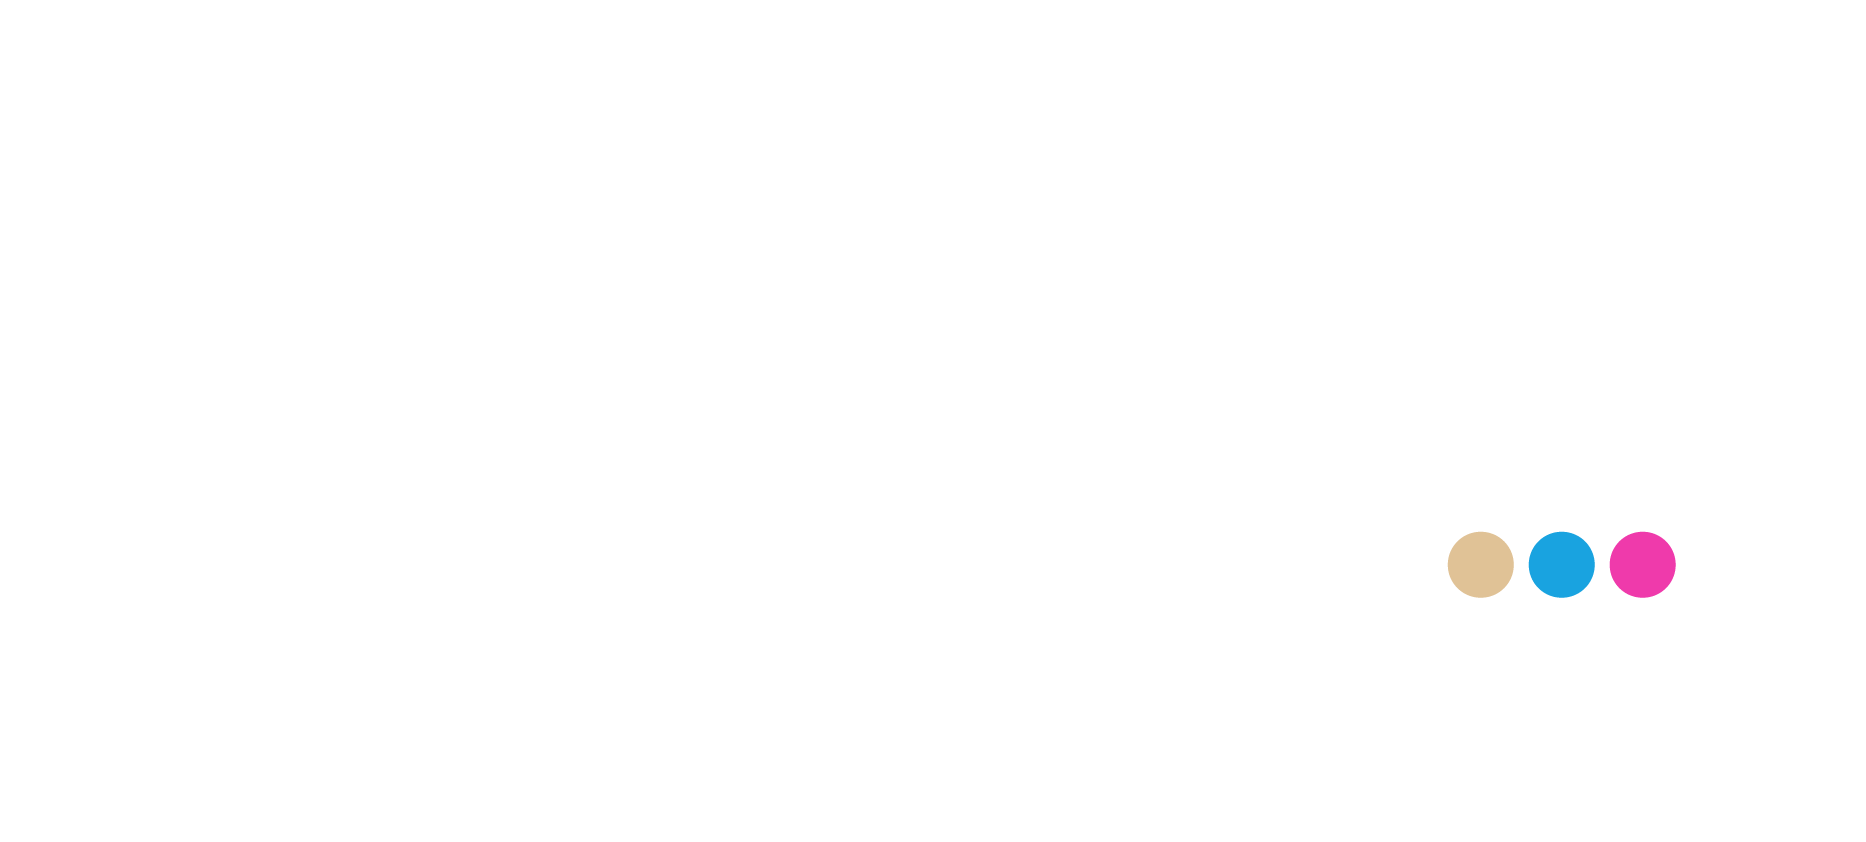 New Zealand Messengers